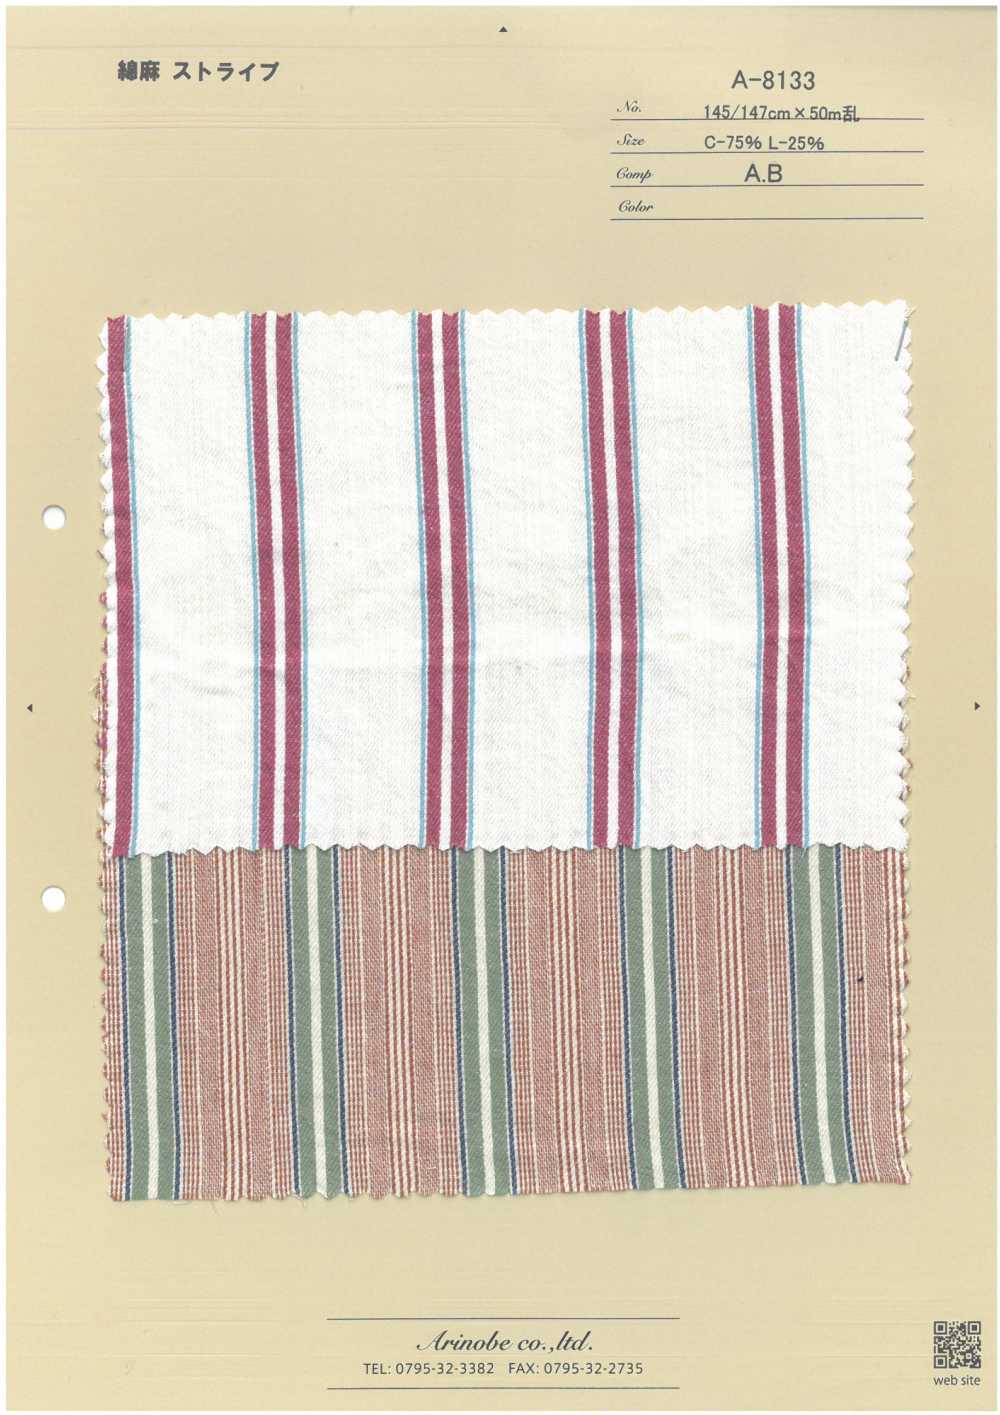 A-8133 Linen Stripes[Textile / Fabric] ARINOBE CO., LTD.